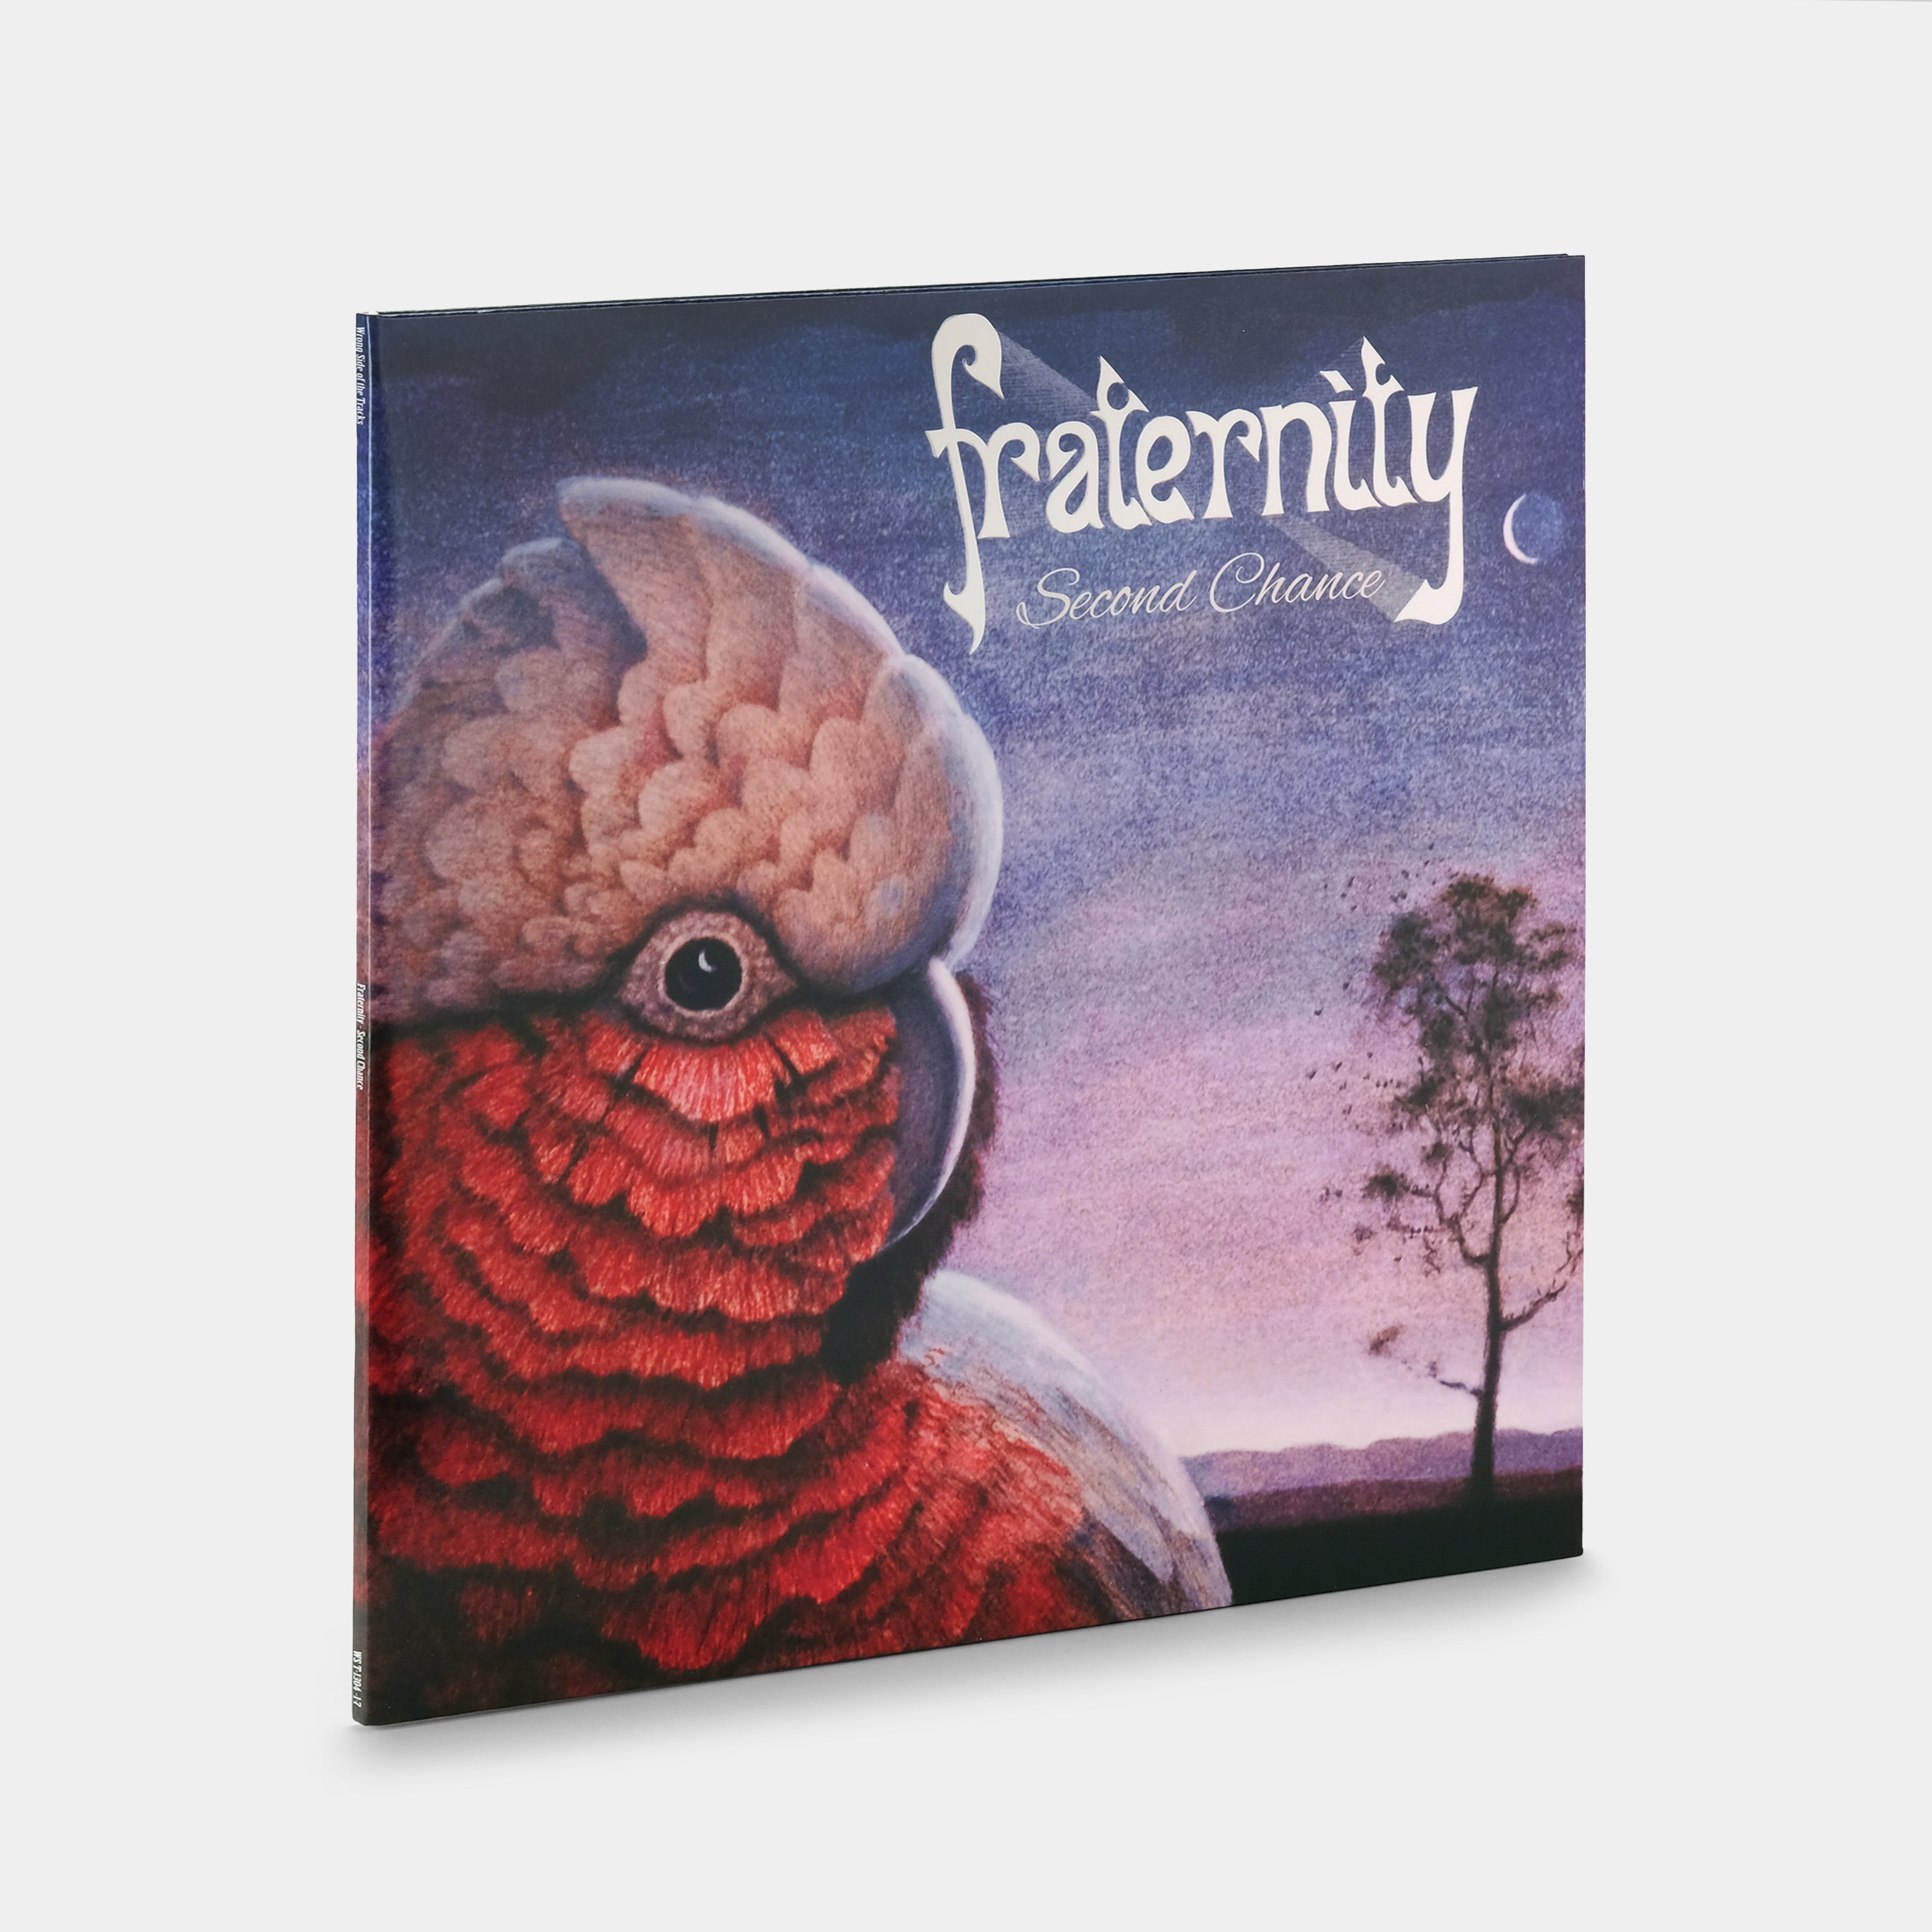 Fraternity - Second Chance 2xLP Purple Vinyl Record